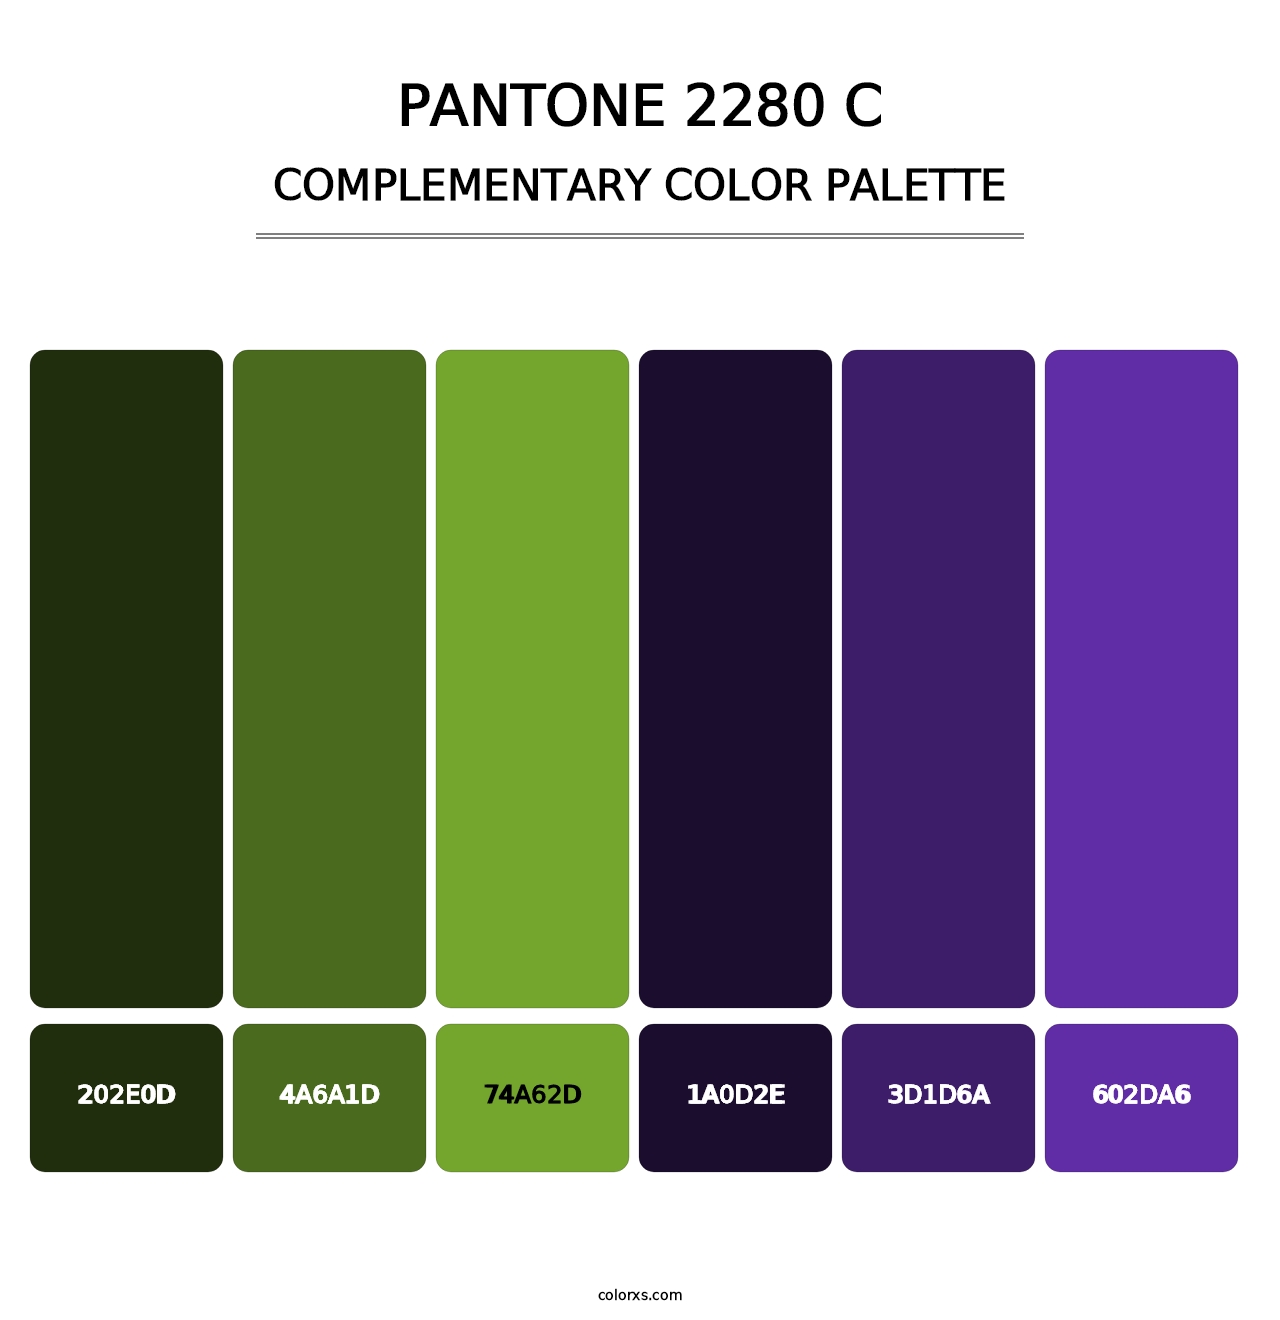 PANTONE 2280 C - Complementary Color Palette